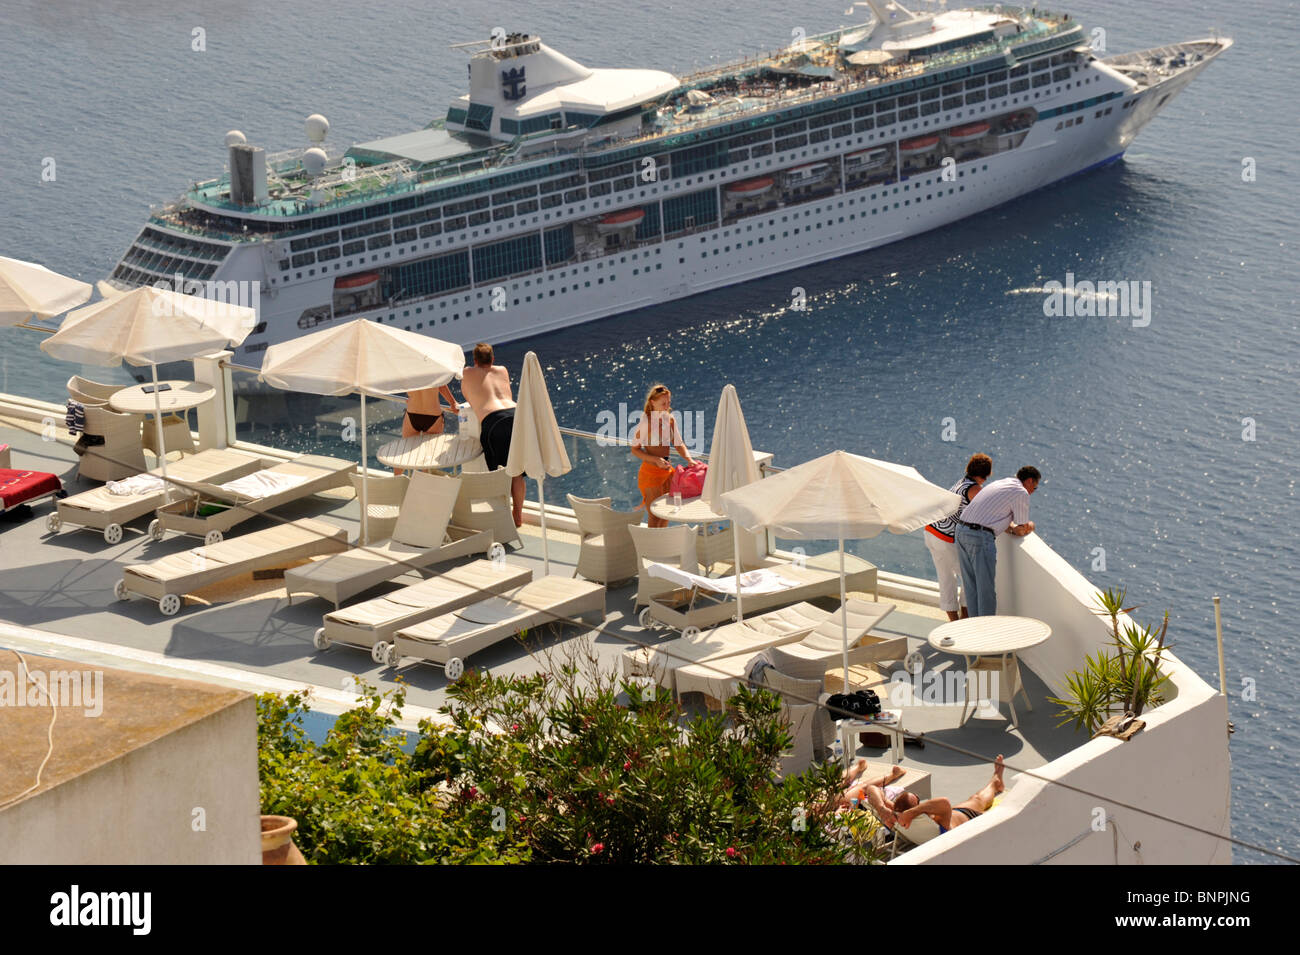 Hotel residents watching a cruise ship departing the caldera, Santorini Cyclades islands Greece Stock Photo